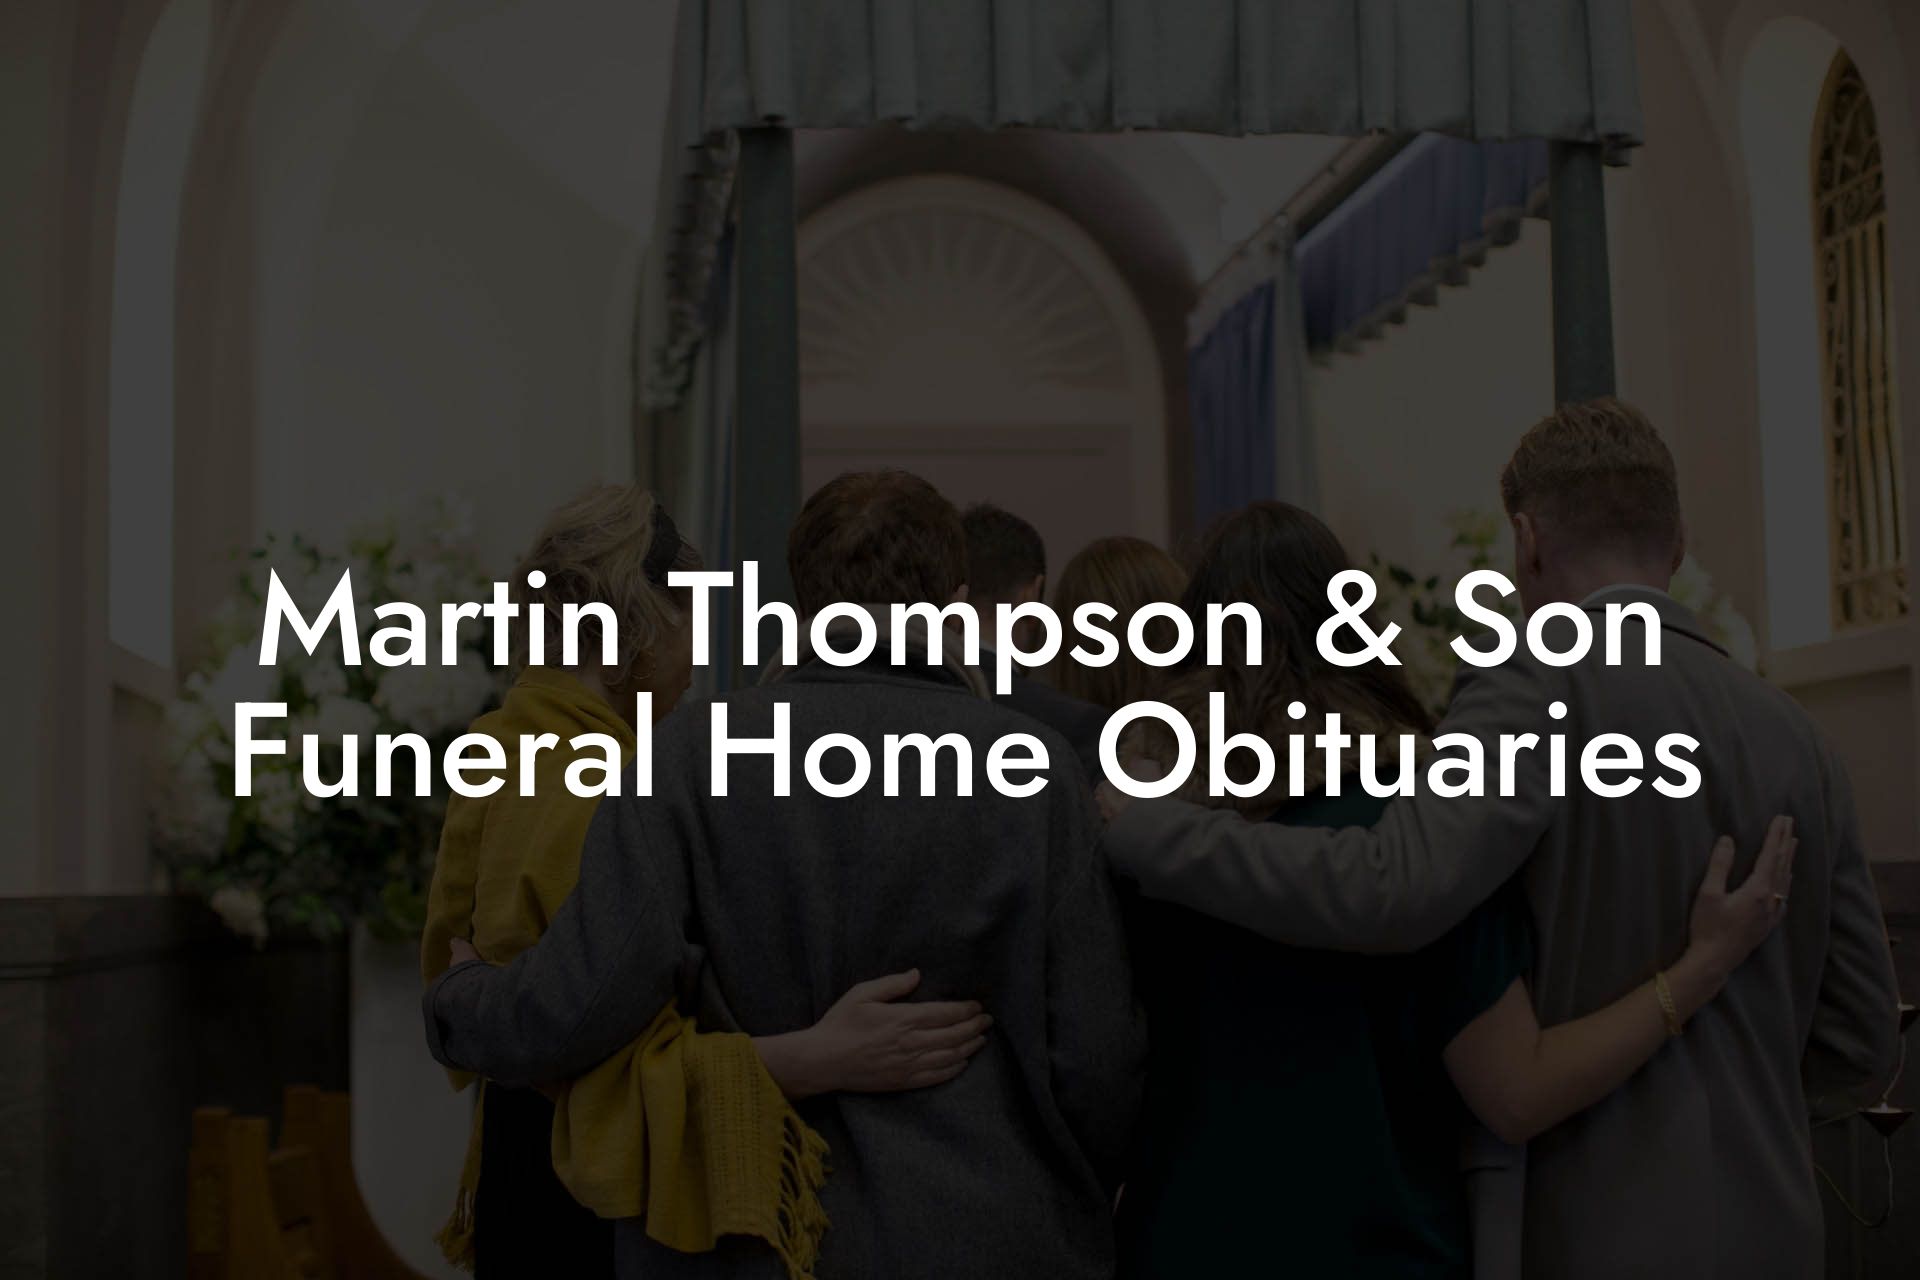 Martin Thompson & Son Funeral Home Obituaries